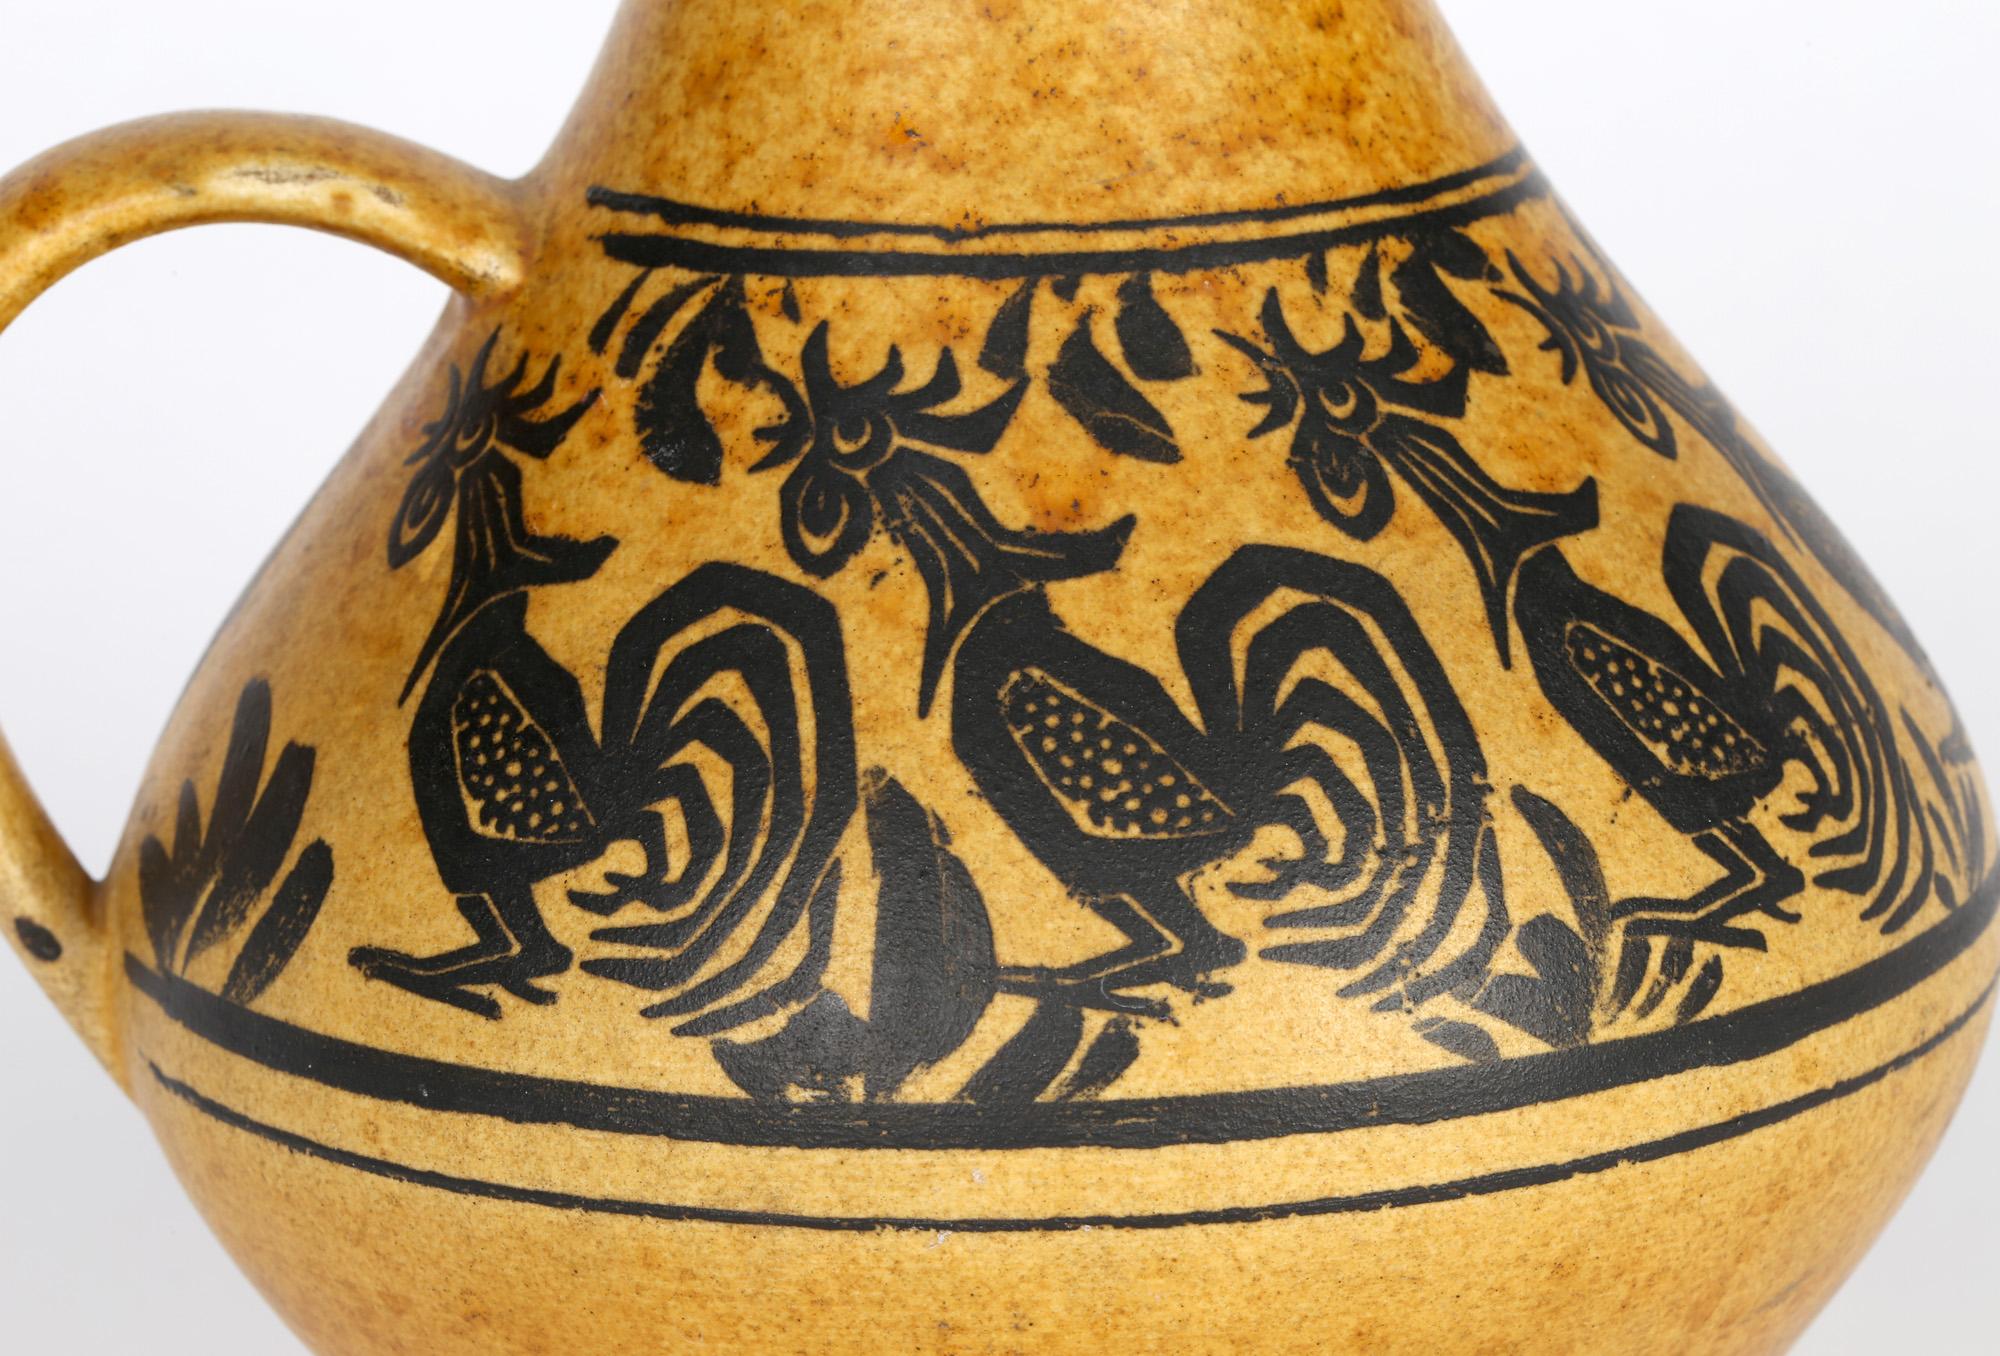 Carstens West German Handled Art Pottery Vase with Cockerels For Sale 1